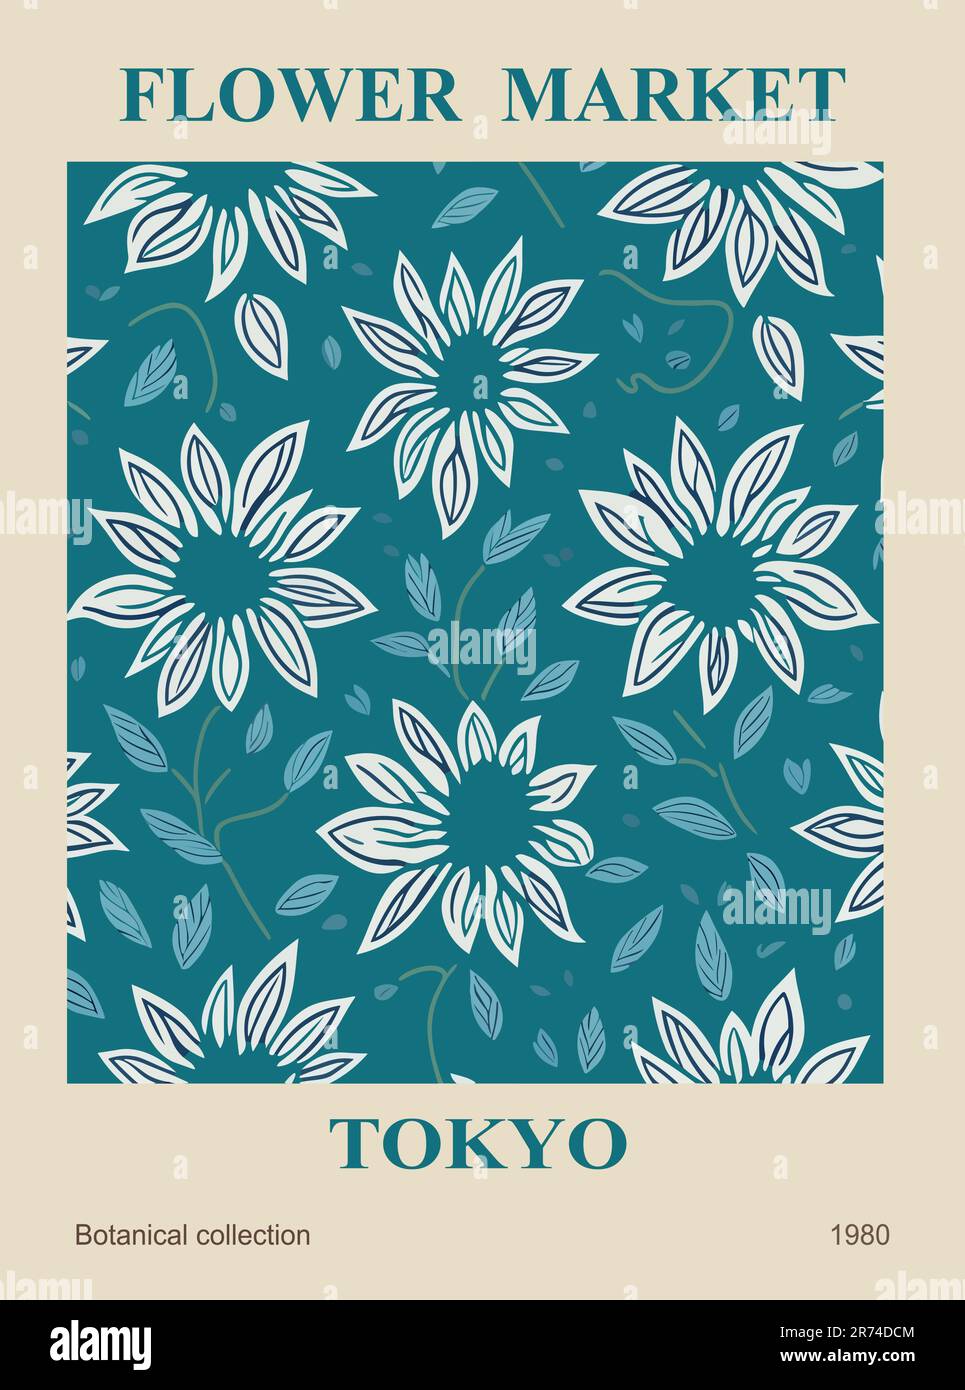 Abstract Flower Market Tokyo poster vector art. Stock Vector